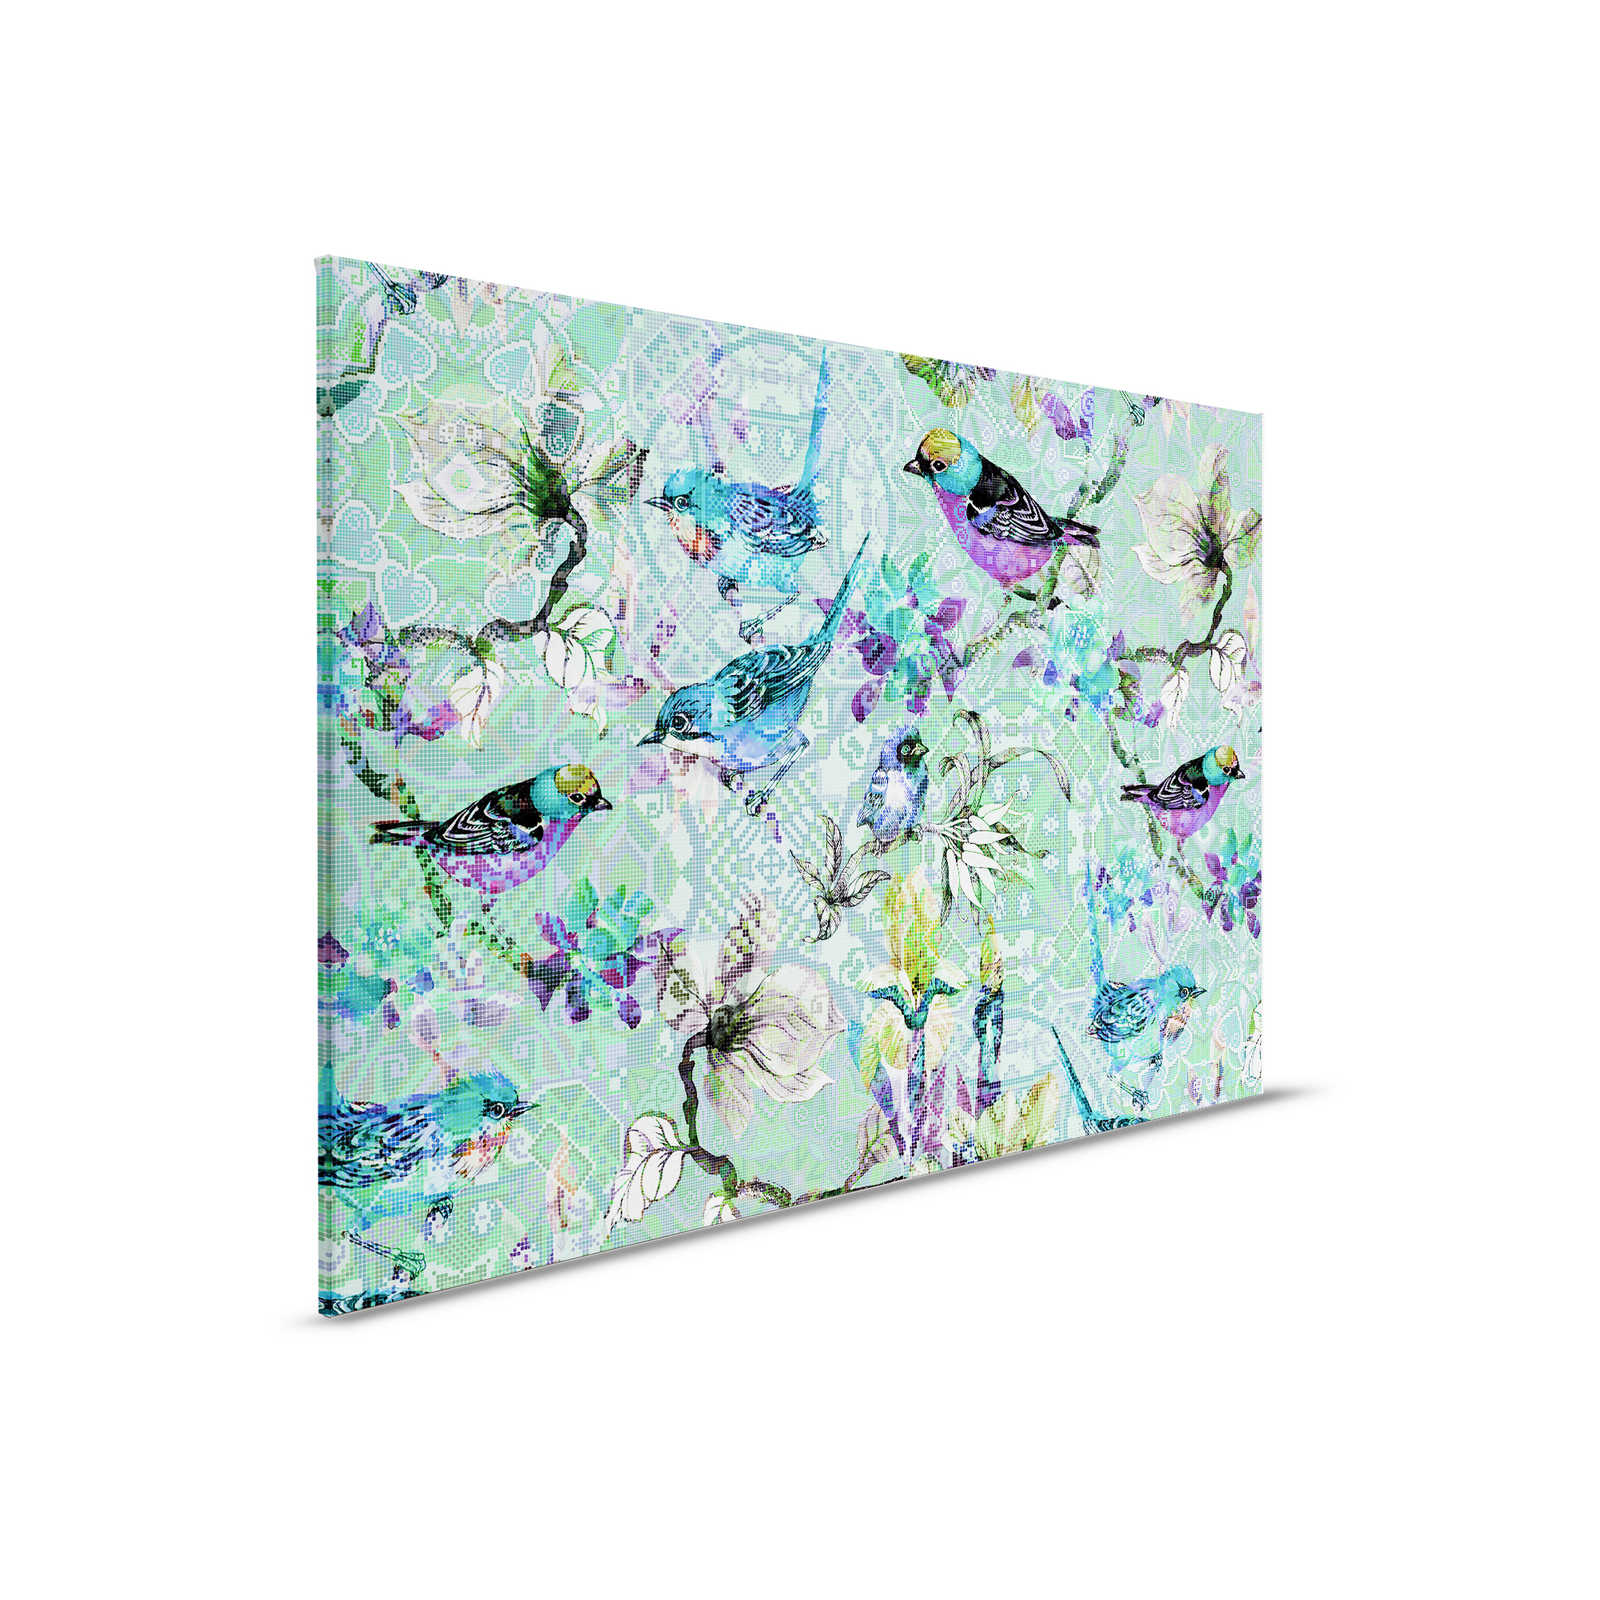 Vogel Leinwandbild mit Mosaik Muster | mosaic birds 3 – 0,90 m x 0,60 m
